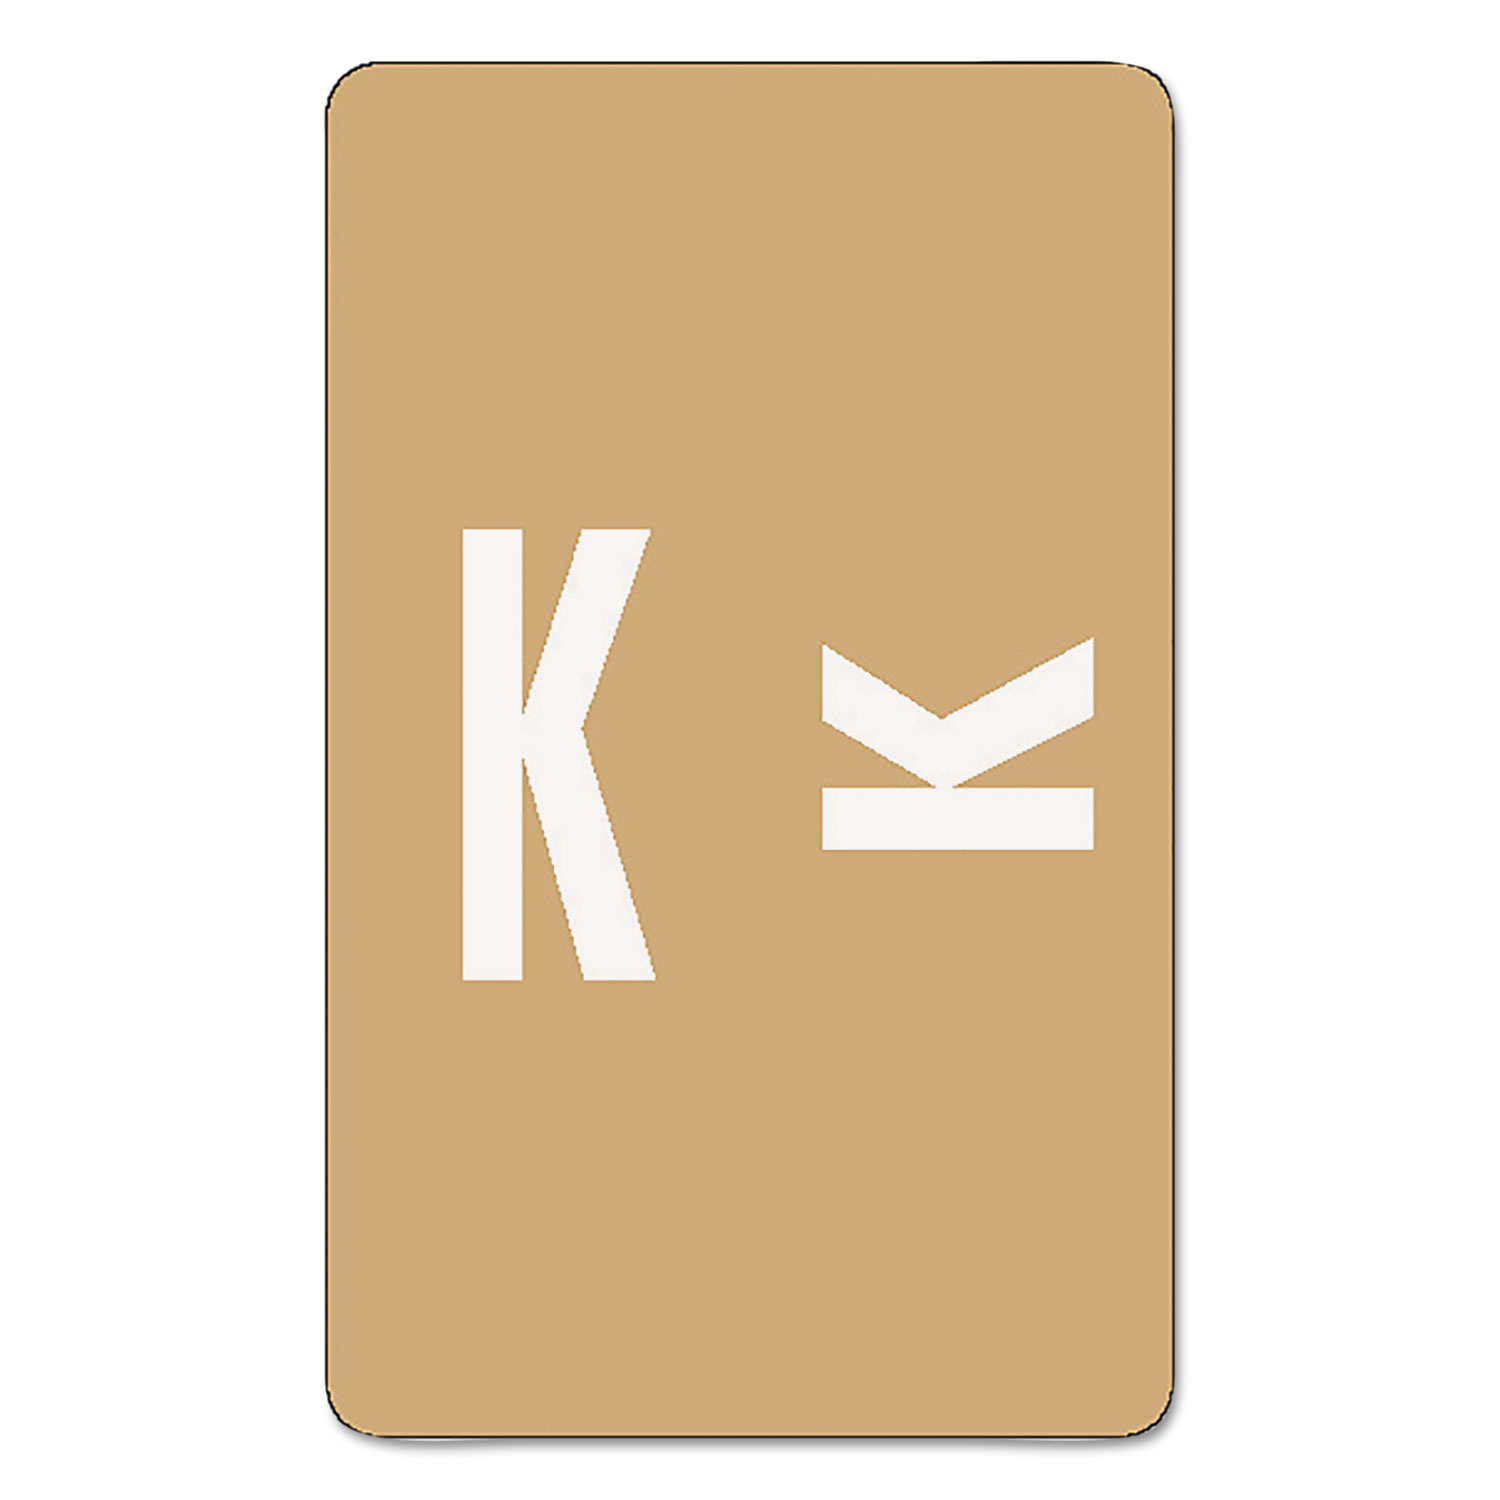  Smead 67181 AlphaZ Color-Coded Second Letter Alphabetical Labels, K, 1 x 1.63, Light Brown, 10/Sheet, 10 Sheets/Pack (SMD67181) 